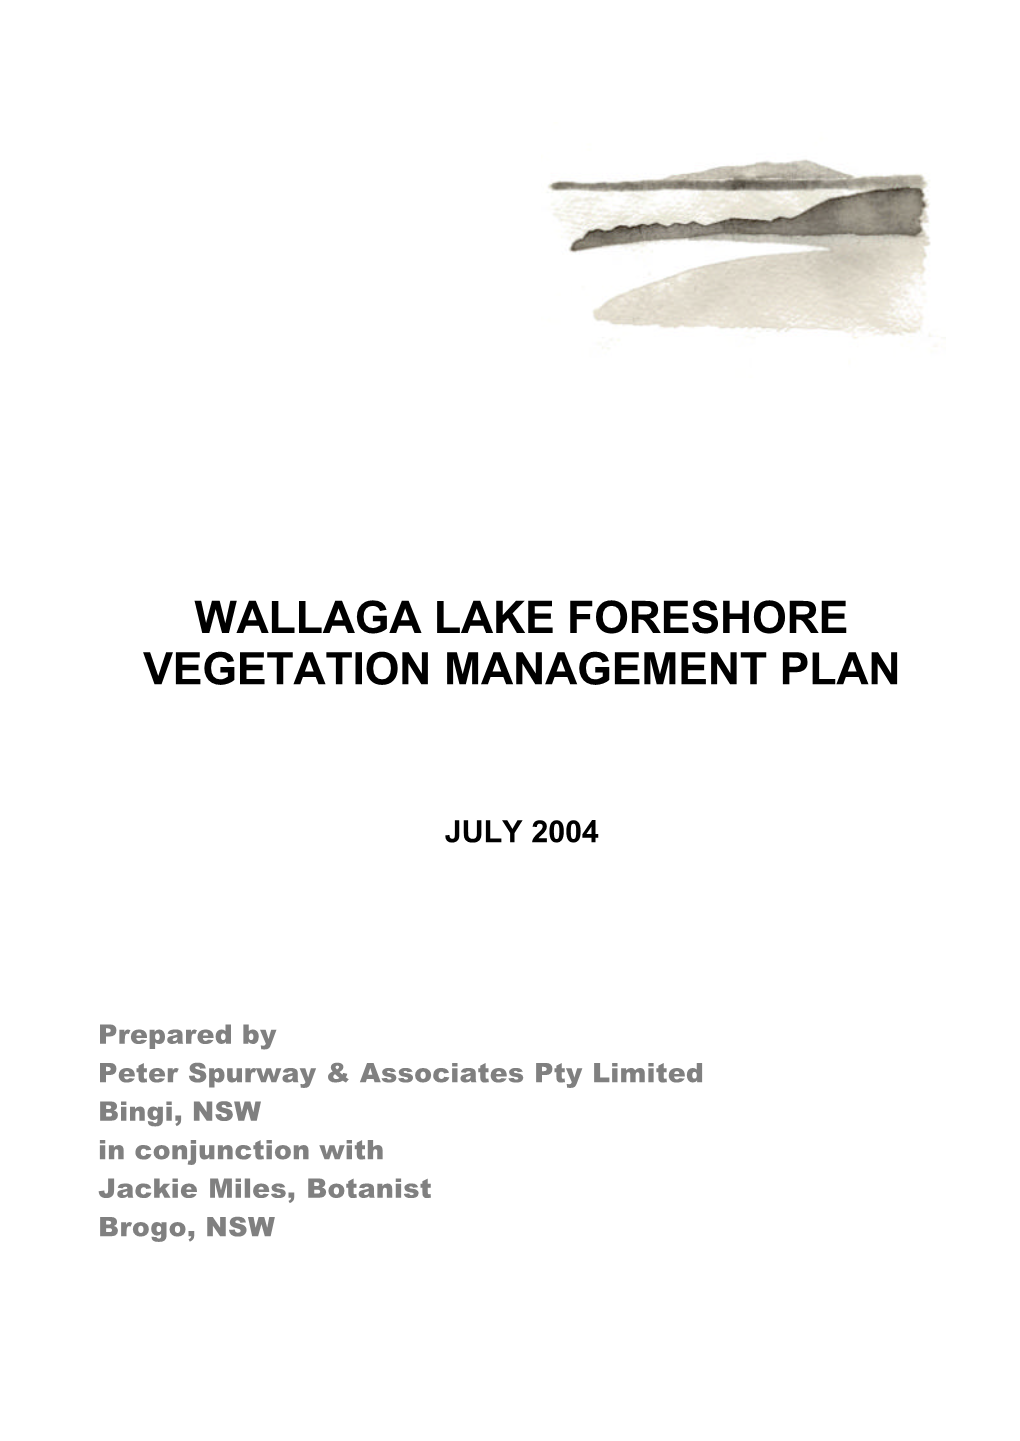 Wallaga Foreshore Vegetation Management